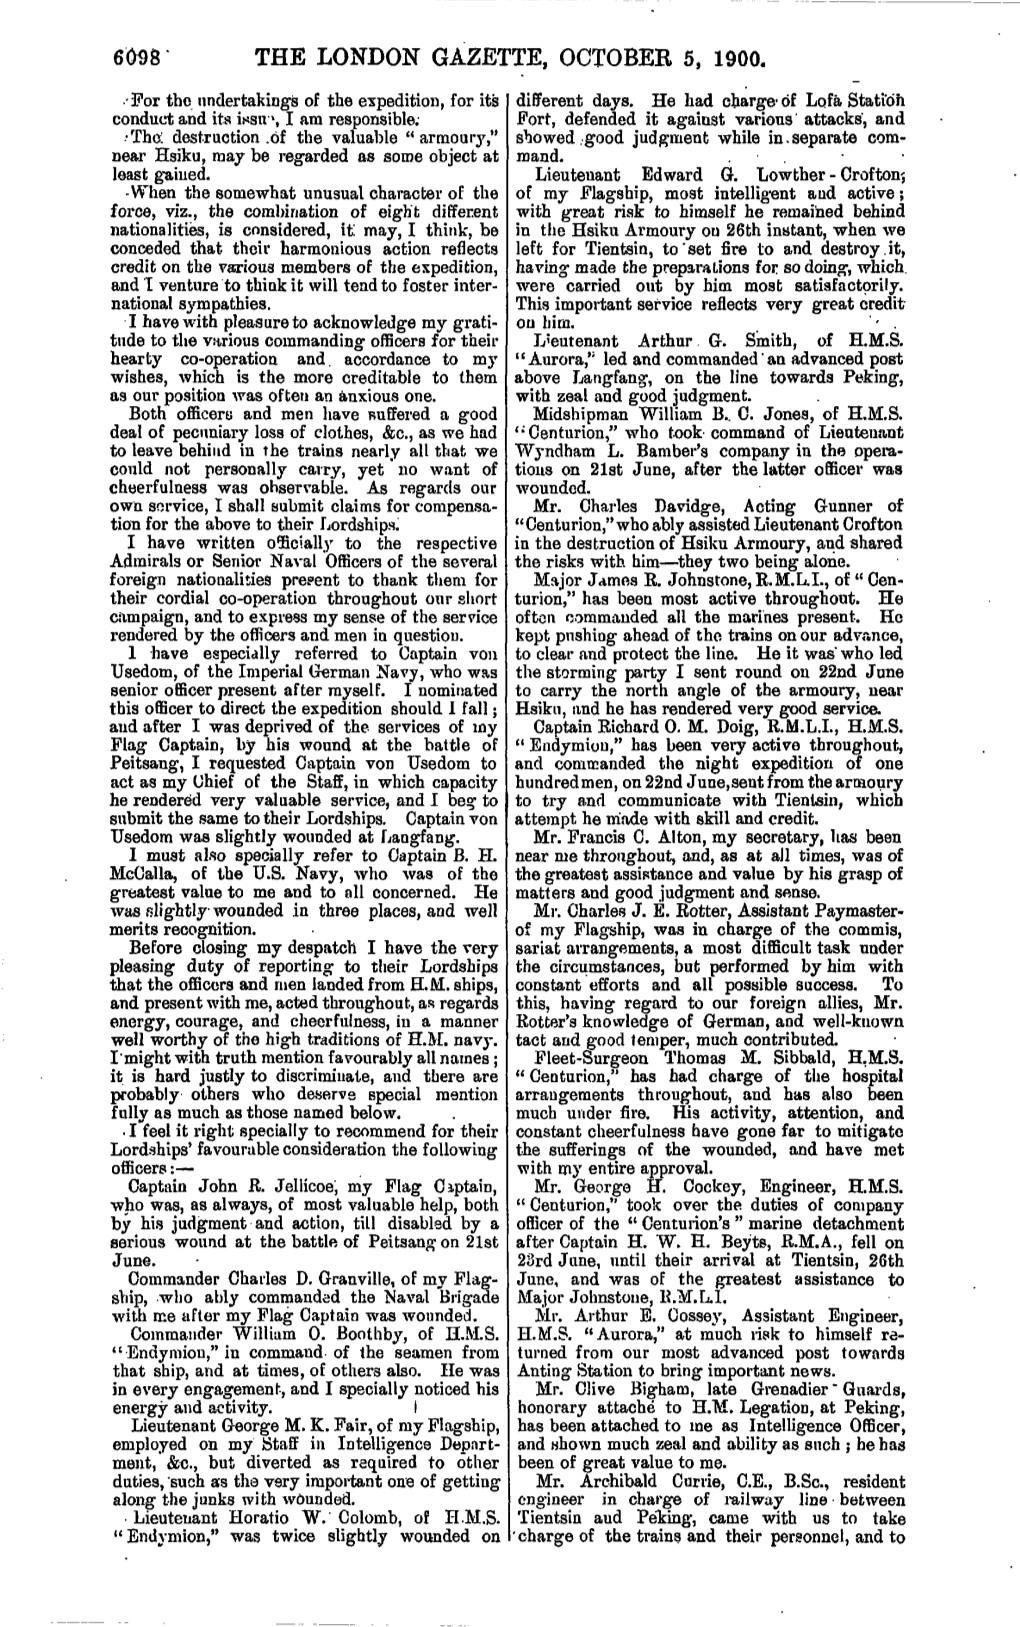 6098' the London Gazette, October 5, 1900